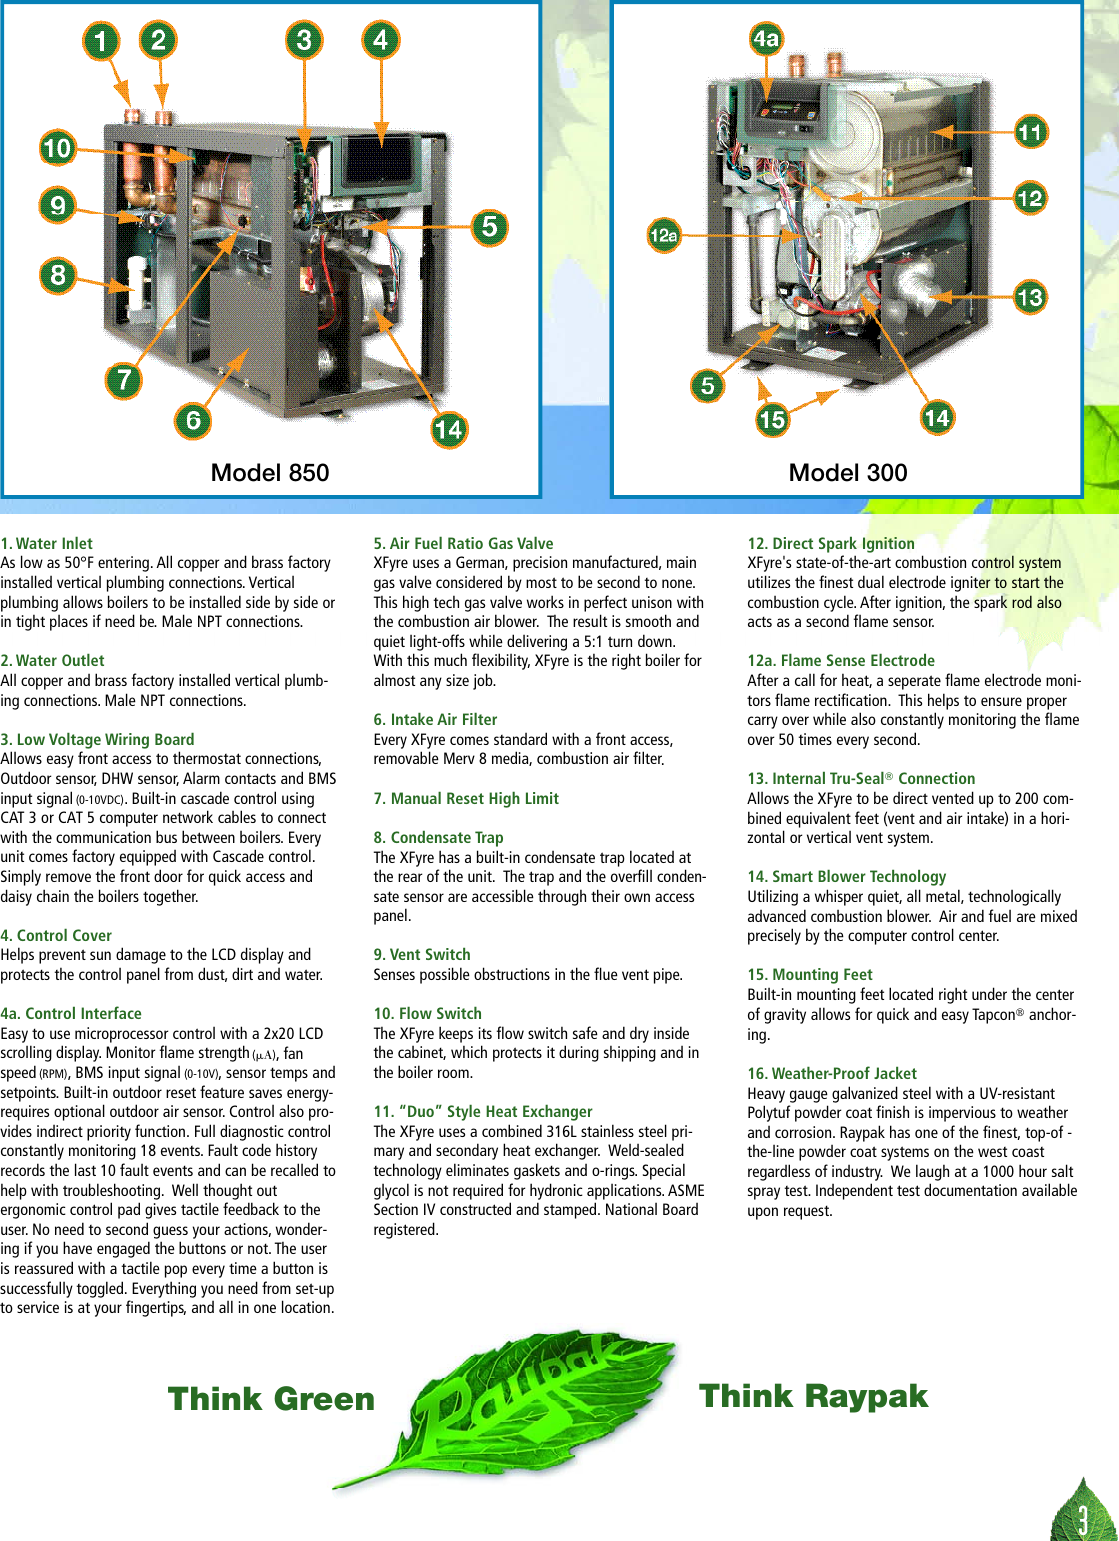 Page 3 of 8 - Raypak Raypak-Xfyre-300-Users-Manual- 1000.22B XFyre Brochure 8 Page  Raypak-xfyre-300-users-manual